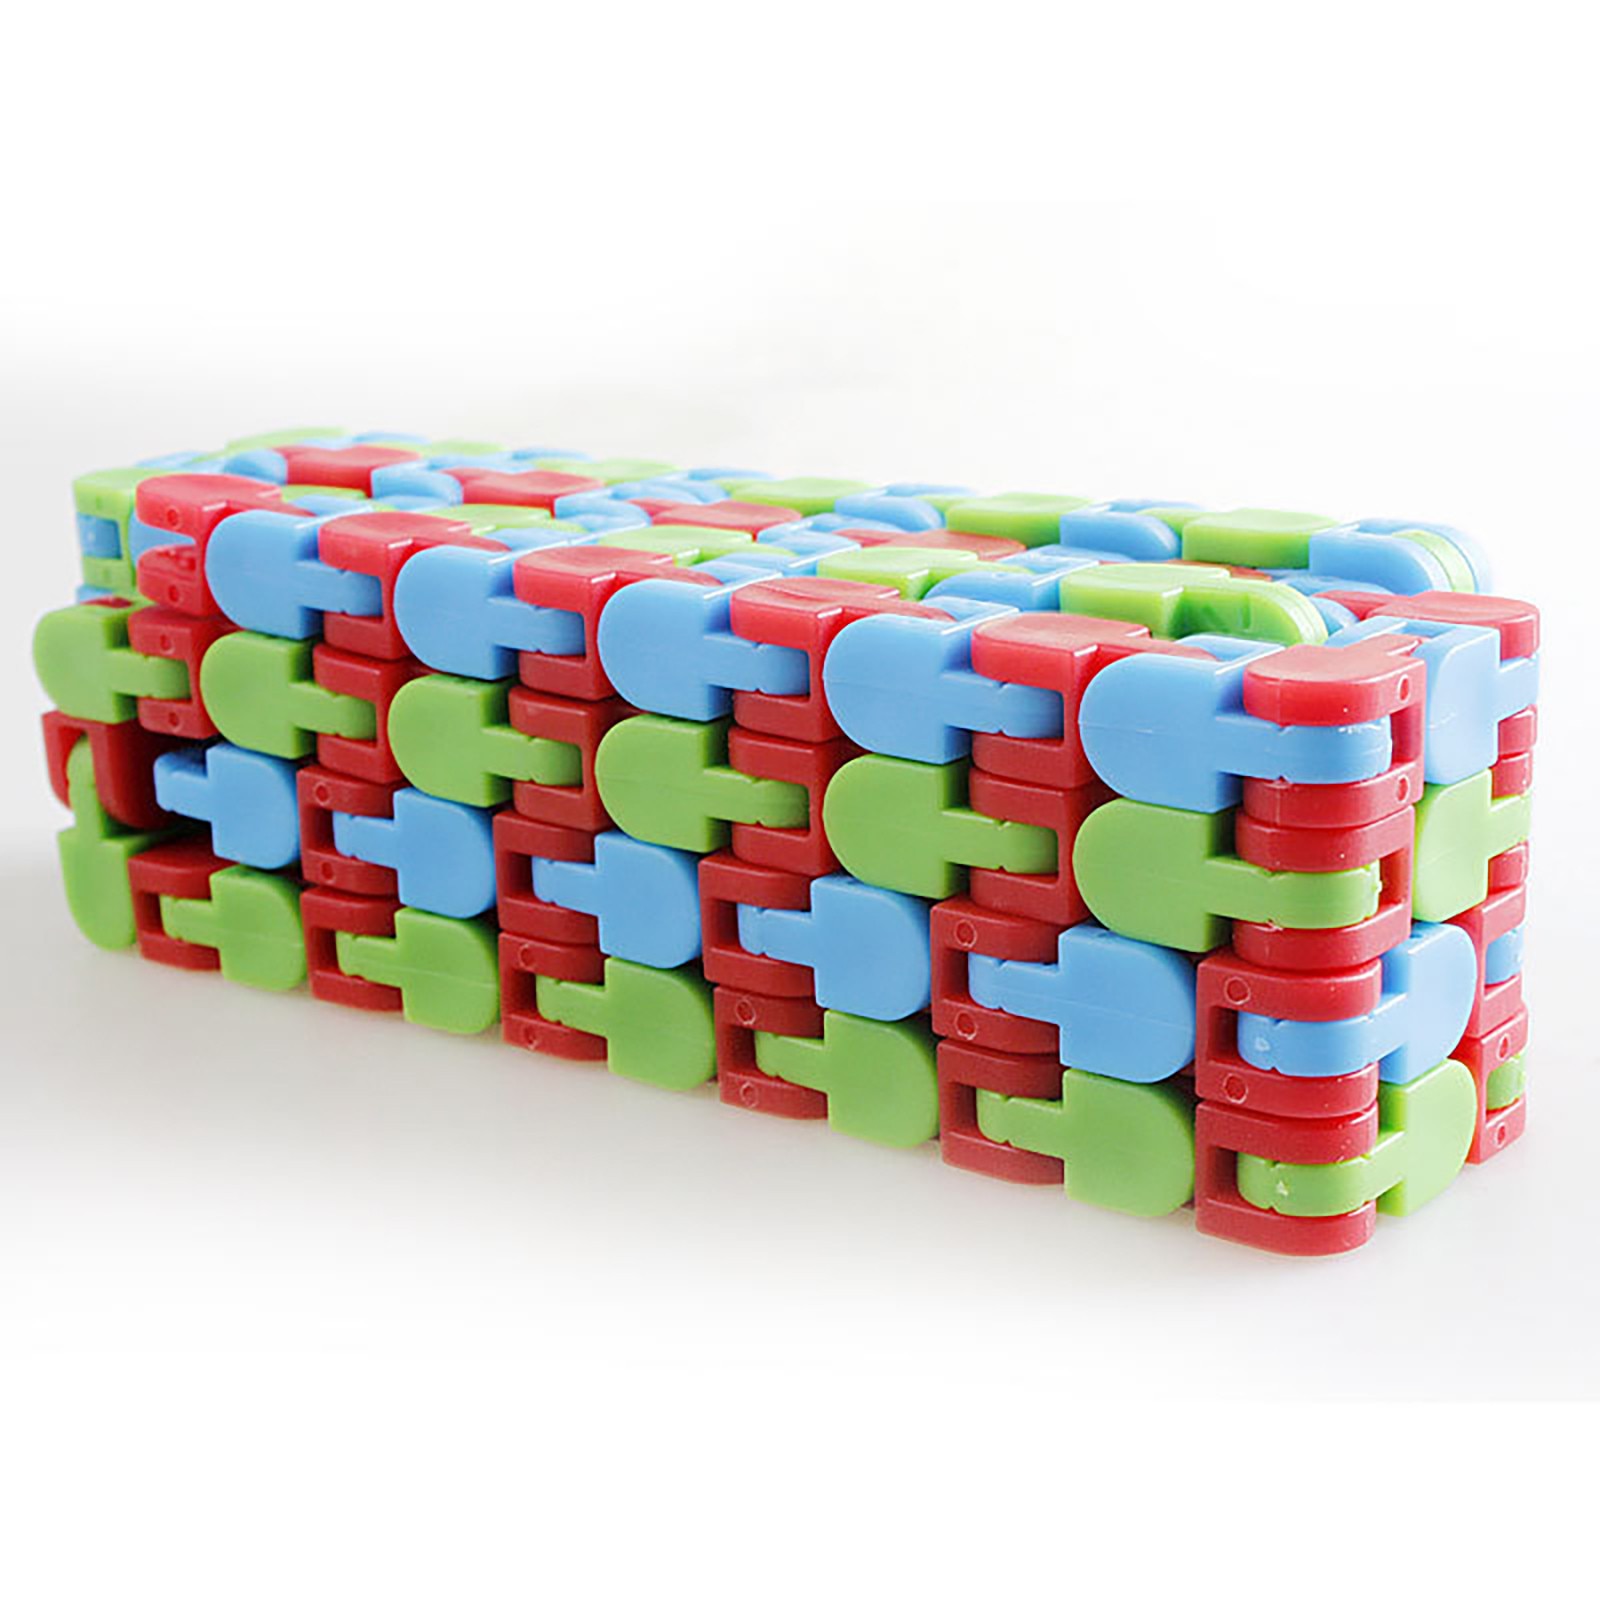 Toys Colorful Puzzle Sensory Tracks Snap And Click Fidget Toys Kids Fidget Toys Stress Relief Rotate 2 - Simple Dimple Fidget